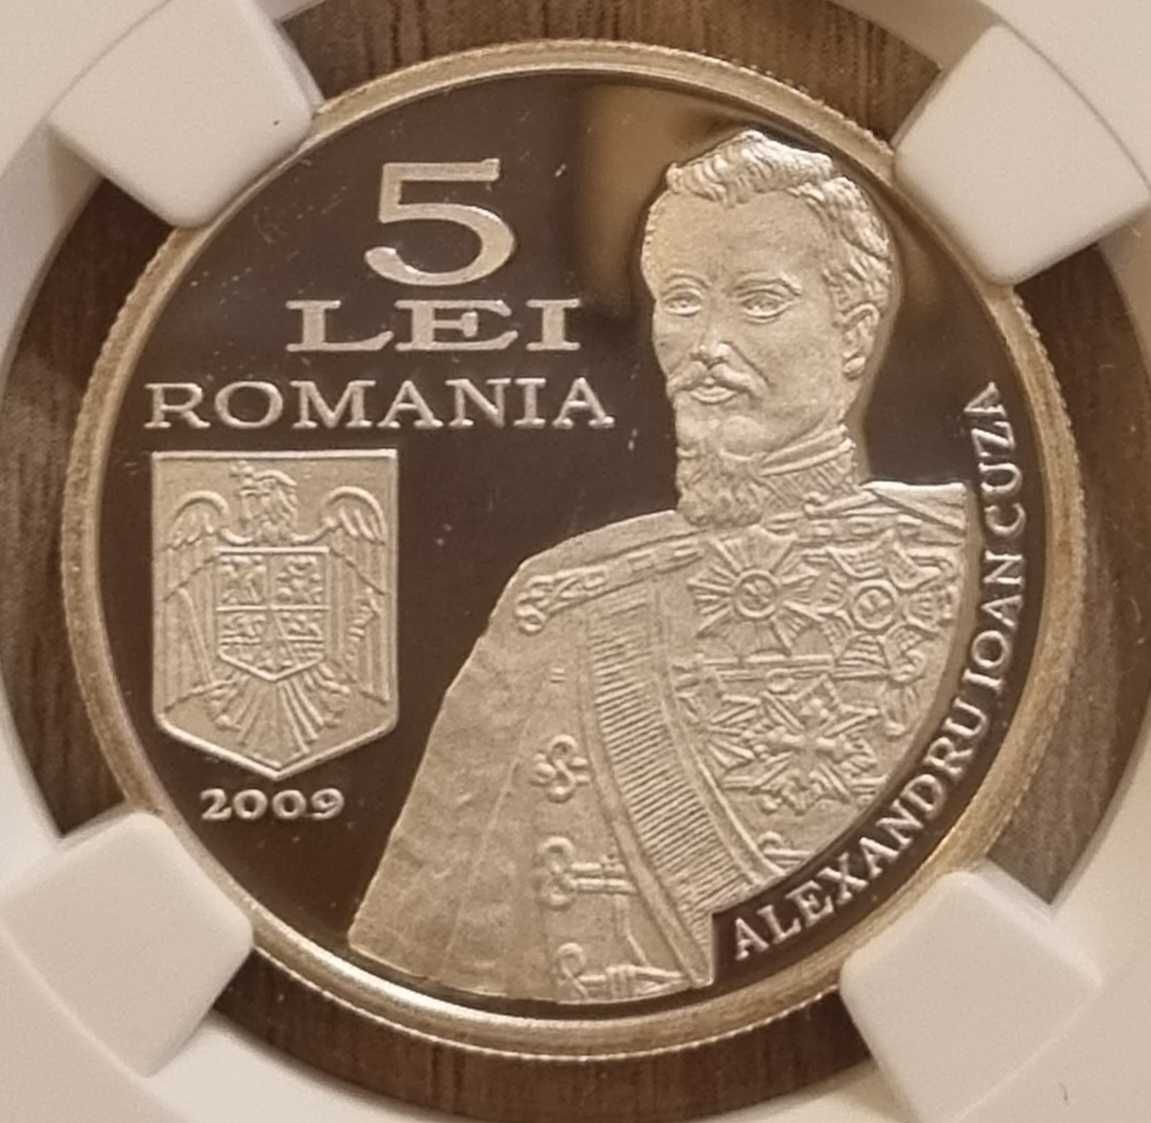 Moneda BNR 5 lei argint Statul Major General gradata NGC PF 69